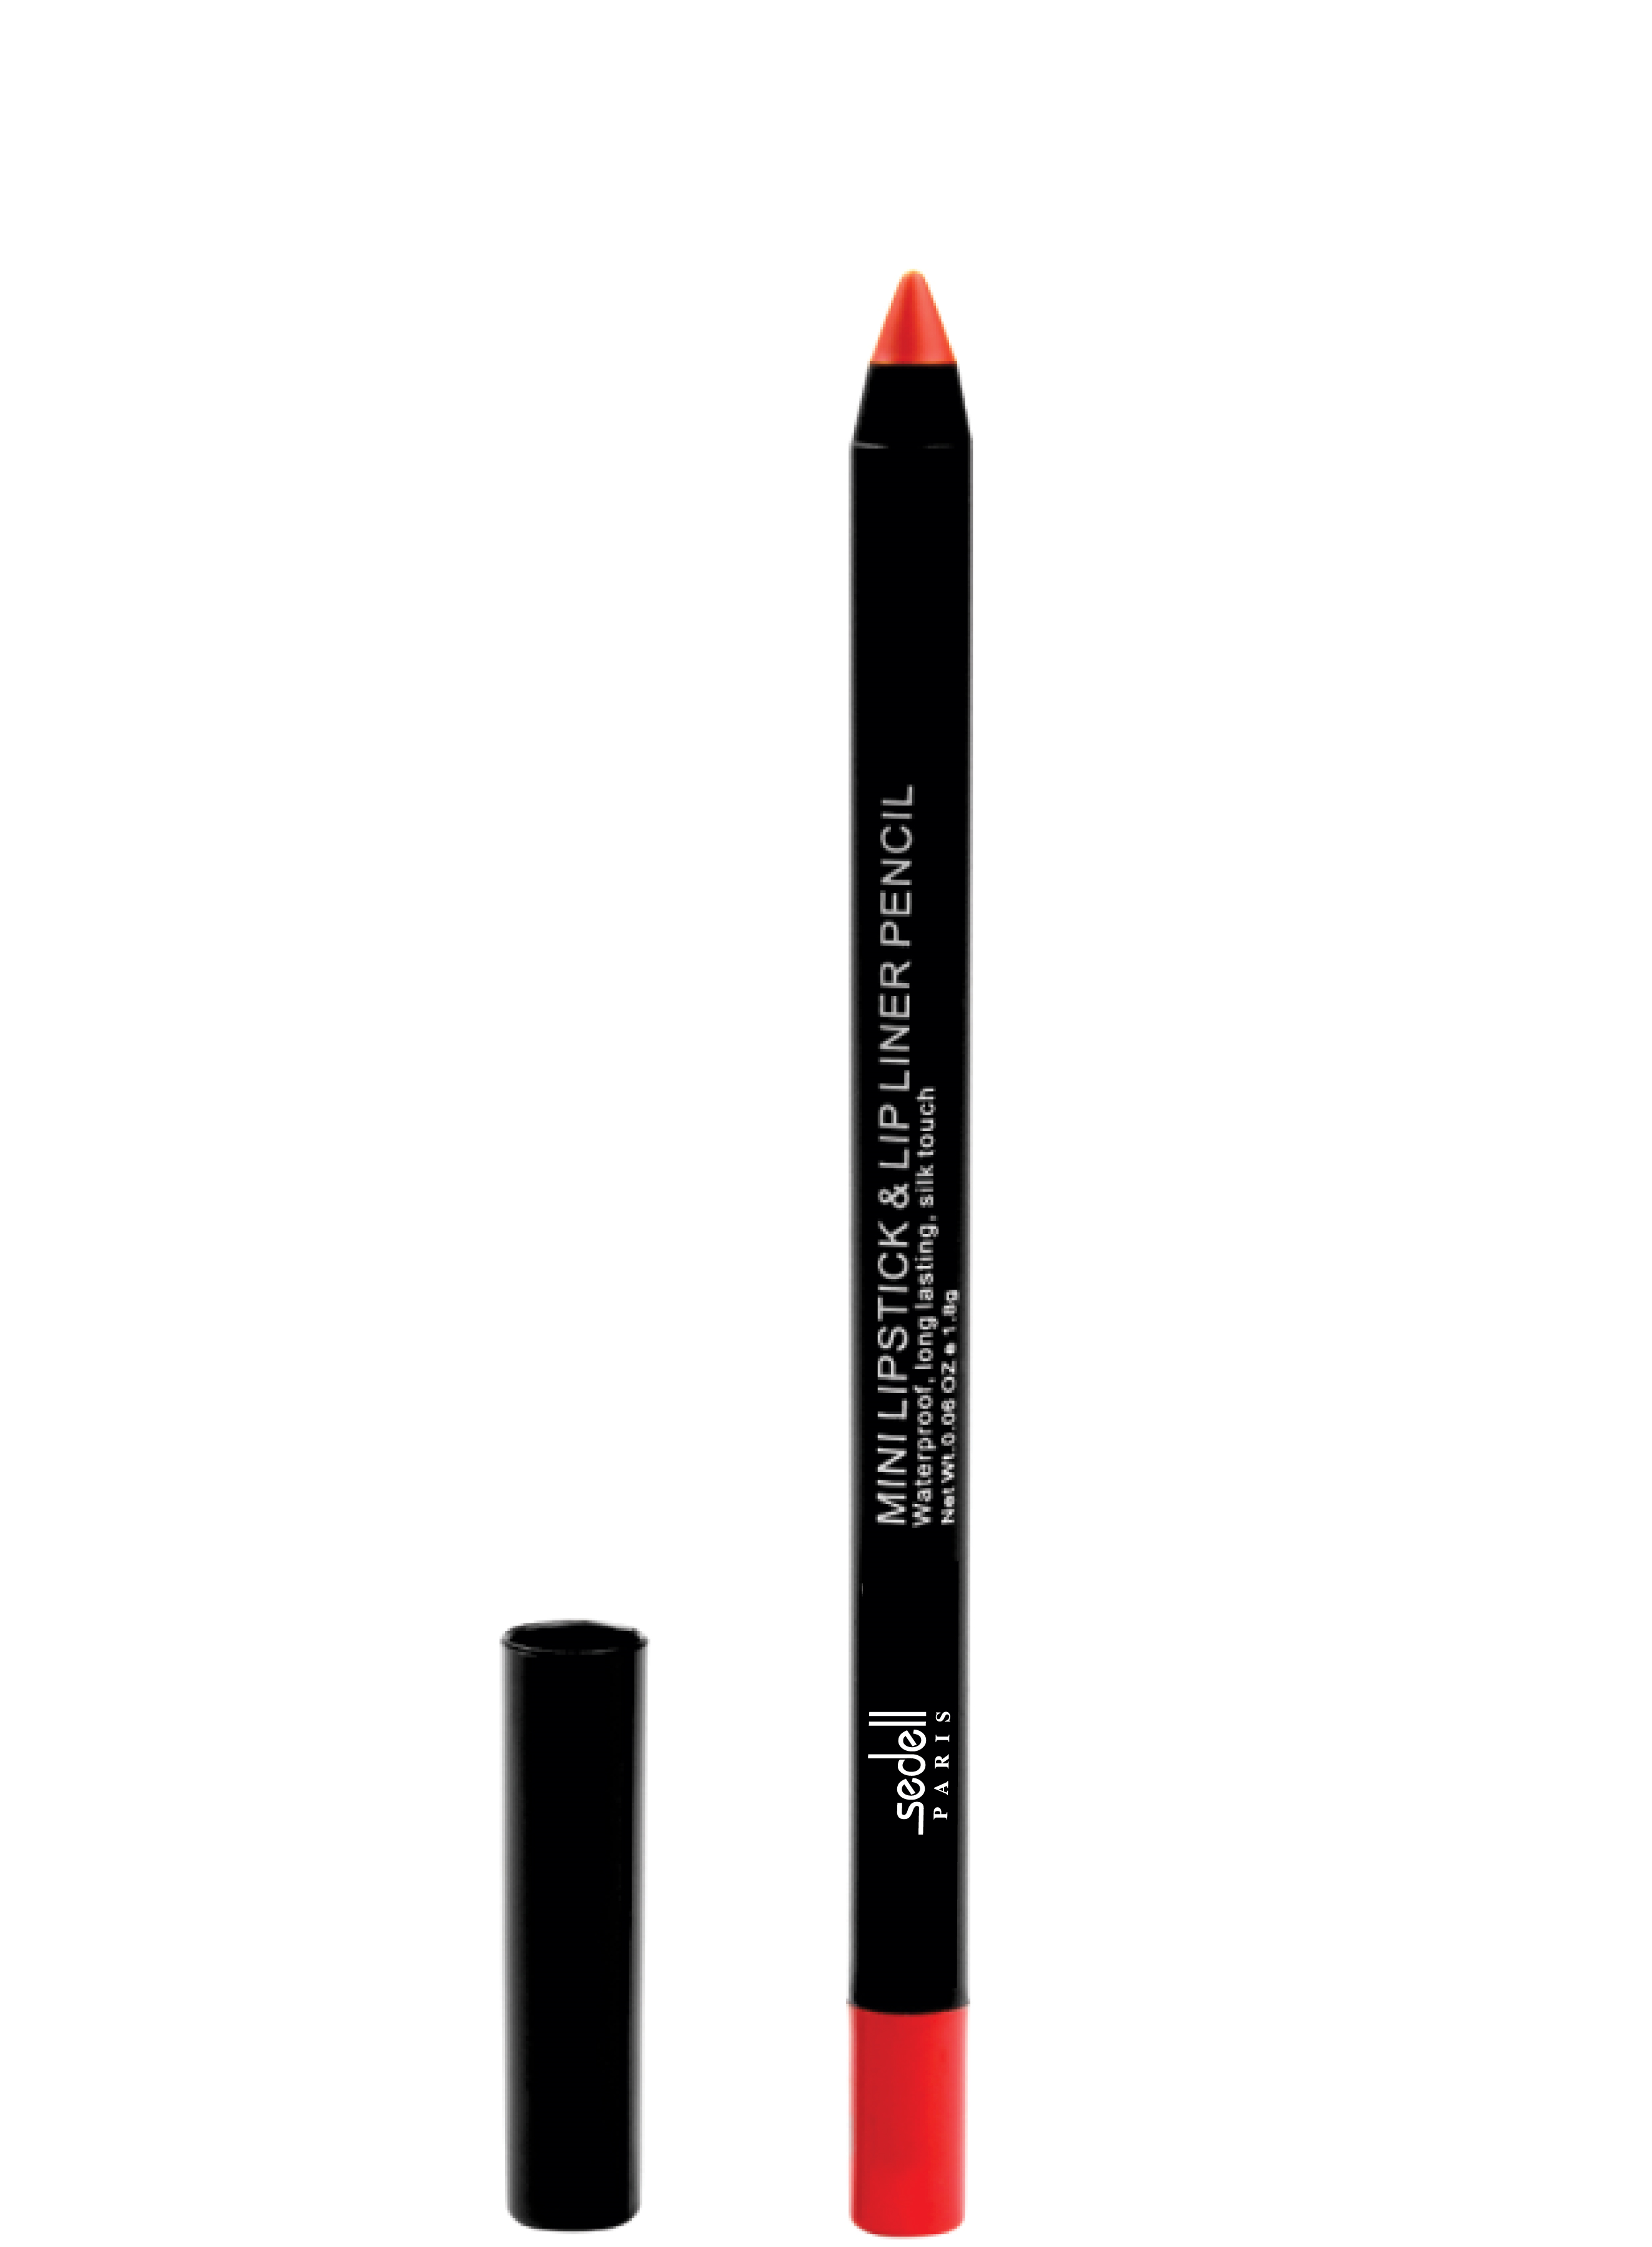 Sedell Paris Mini Lipstick & Lip Liner Pencil Coral Rose - 1.4g